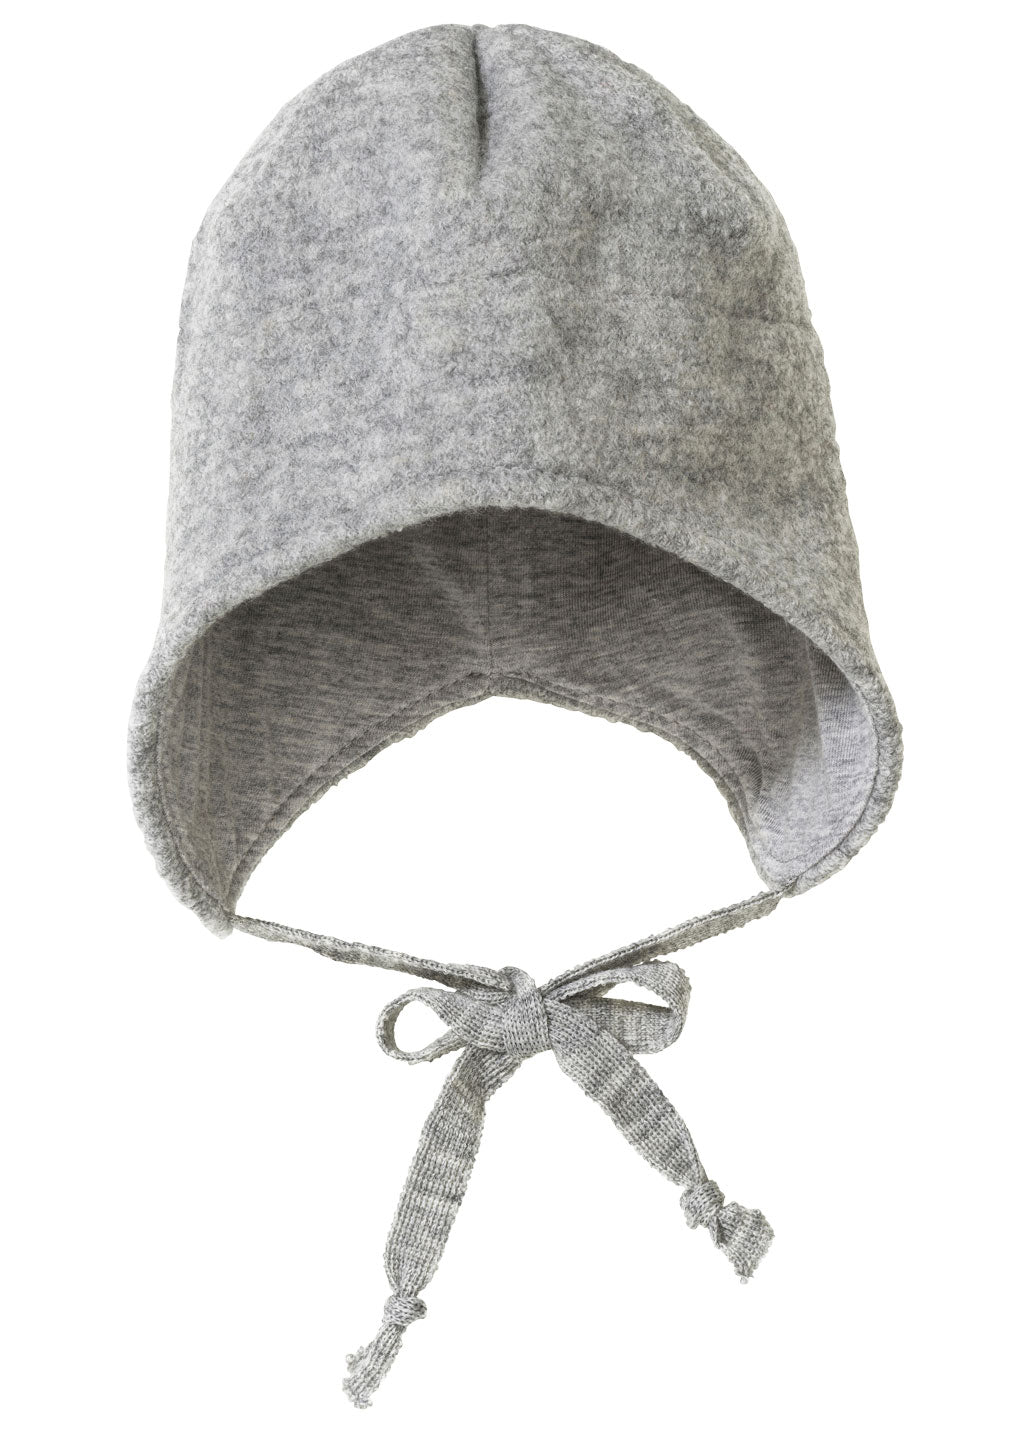 Disana boiled wool hat in gray